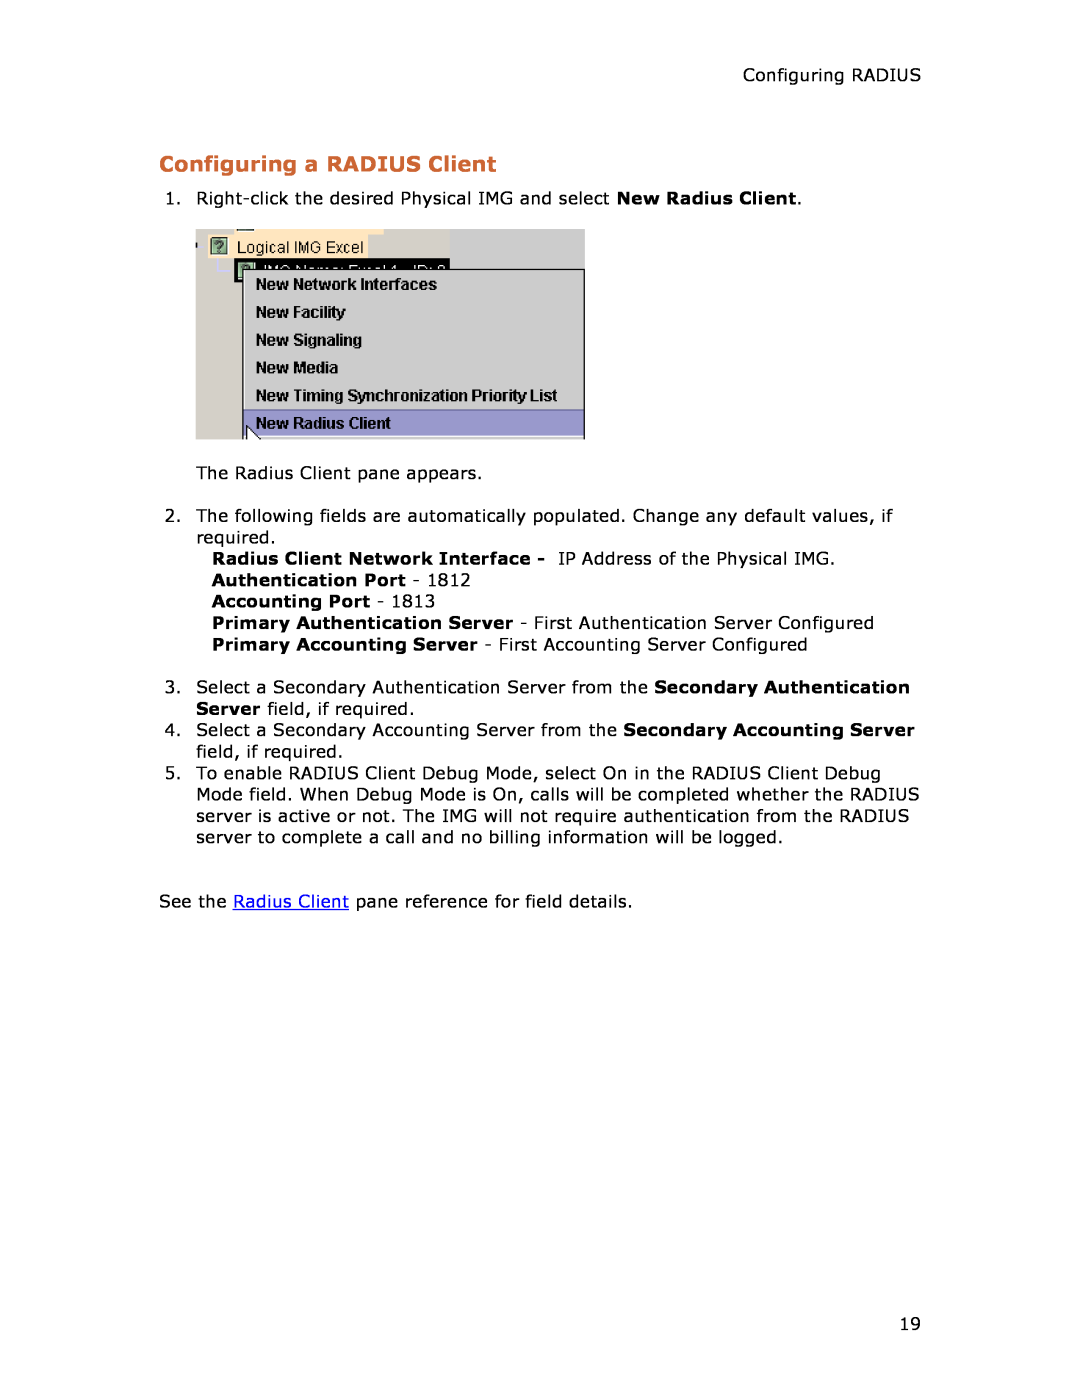 Dialogic 1010 manual Configuring a RADIUS Client, Accounting Port 